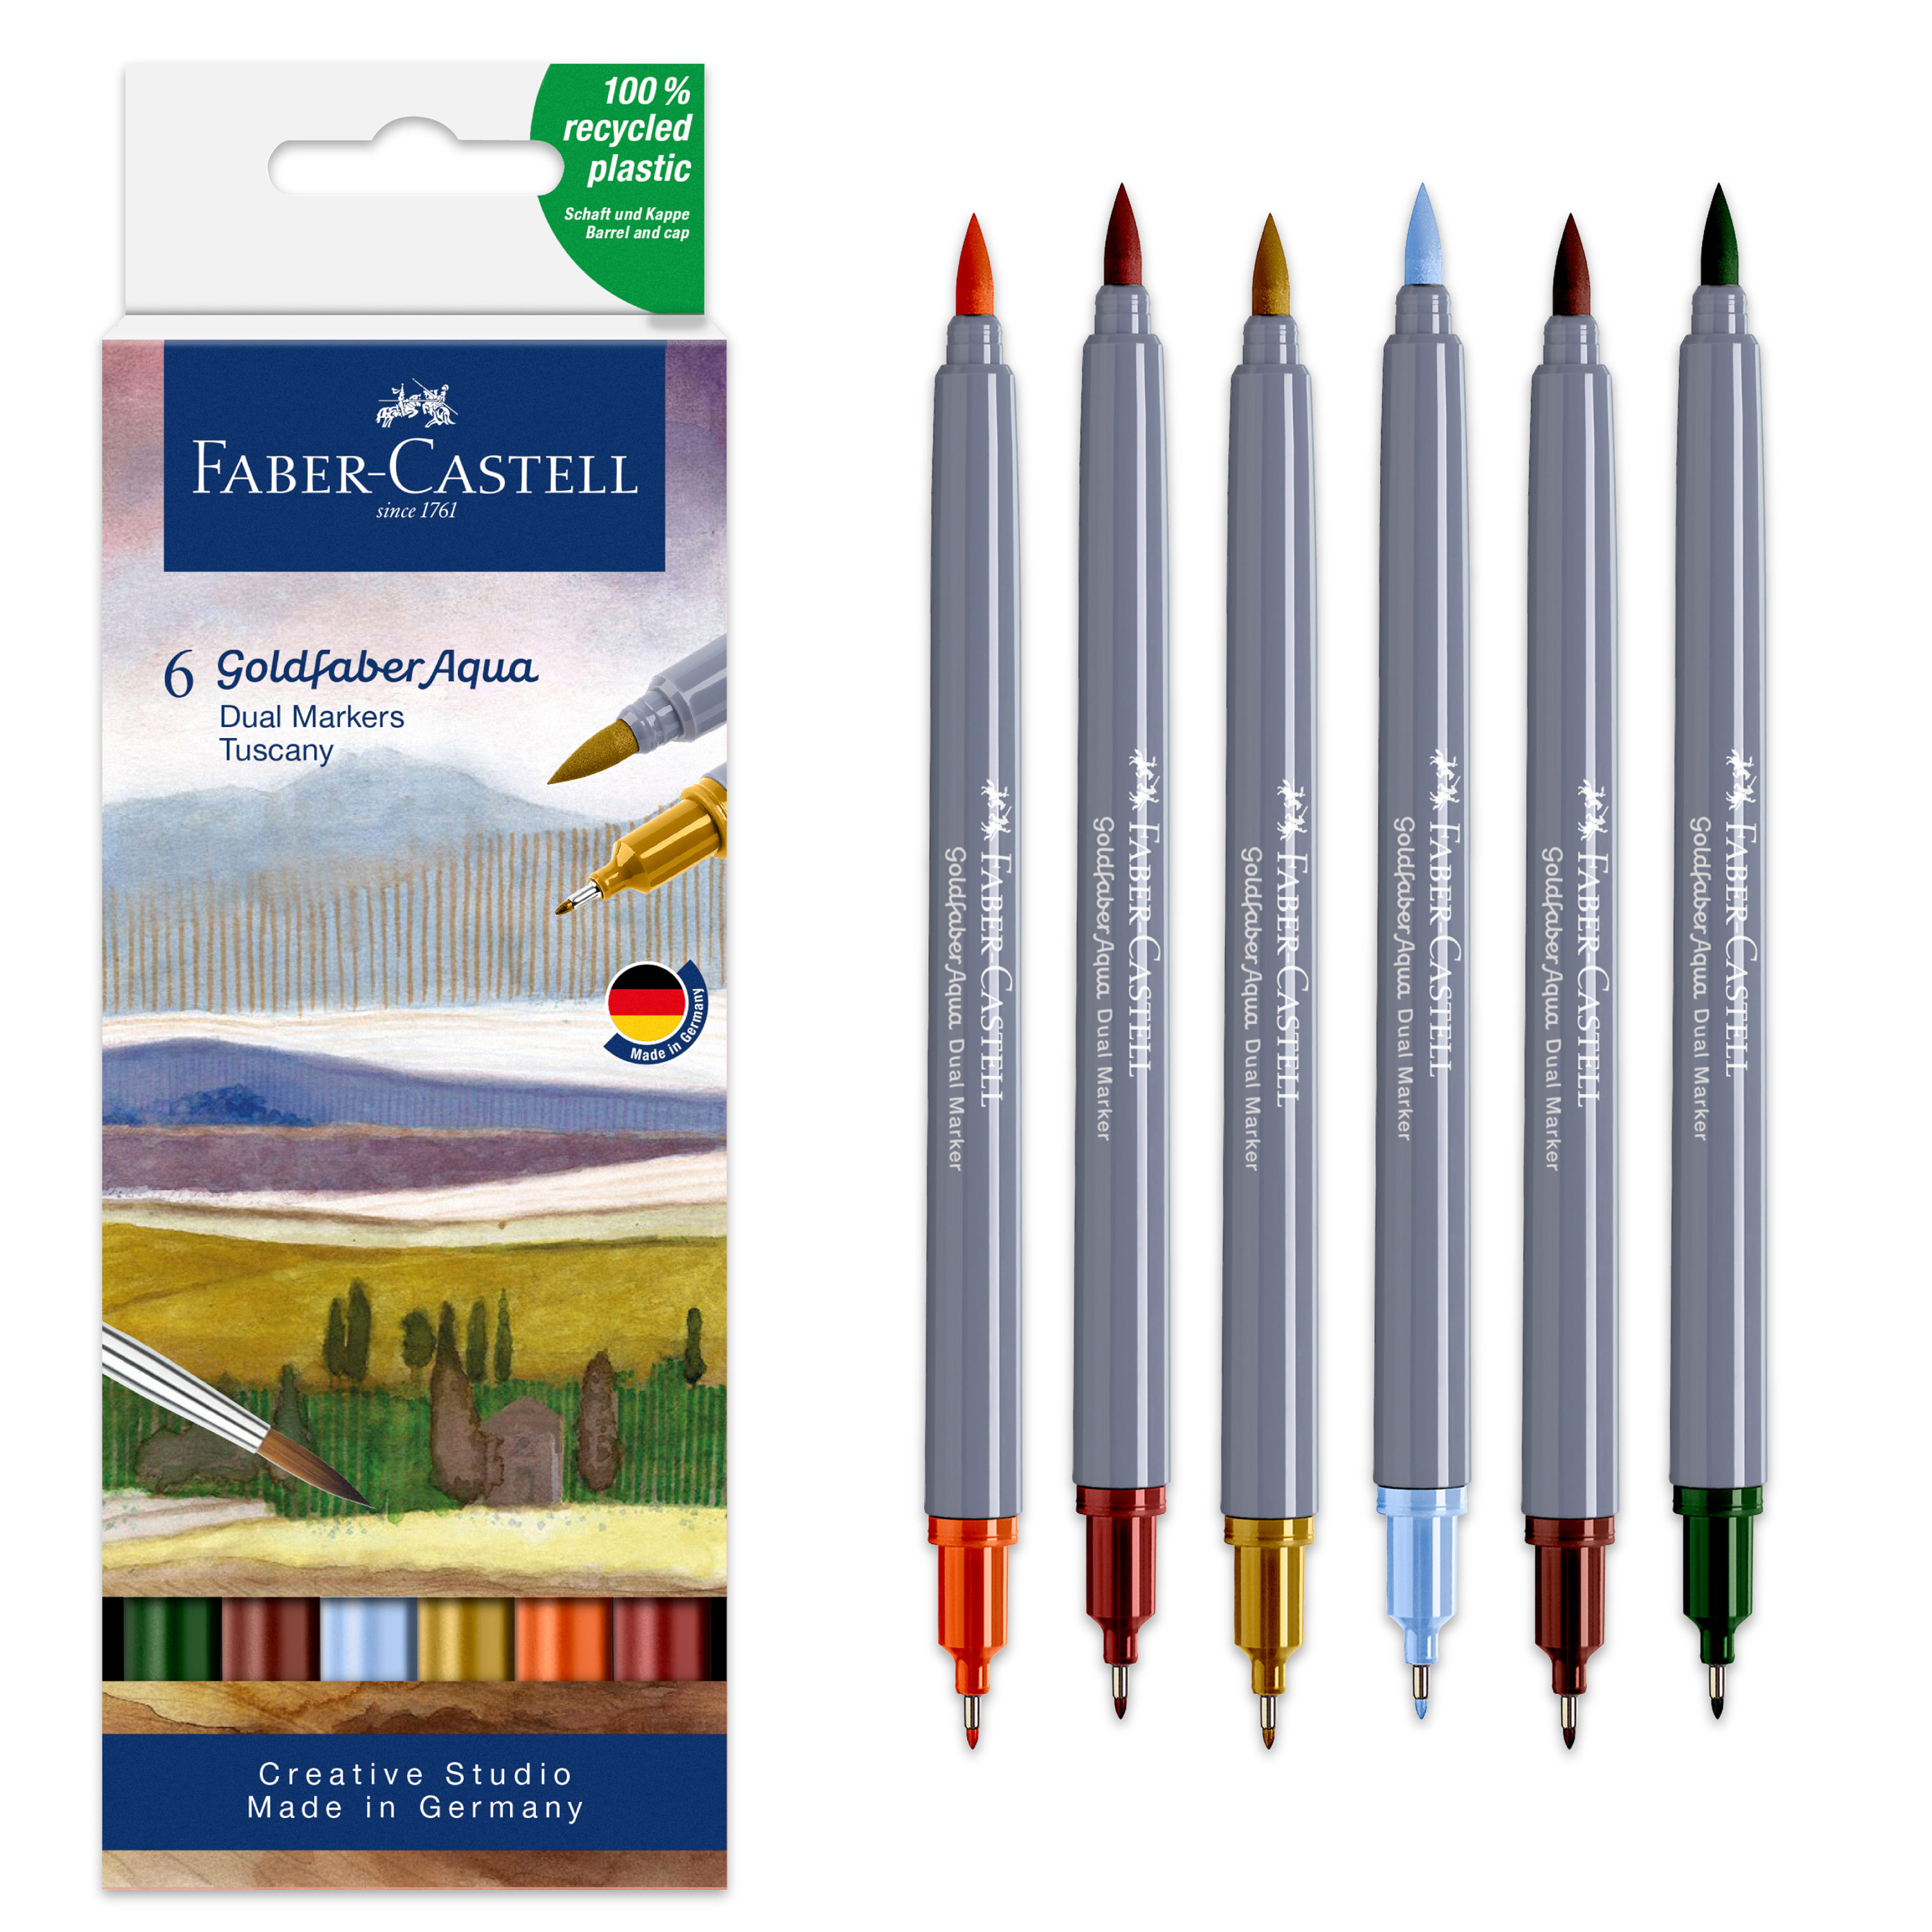 Faber-Castell 48 Goldfaber Regular and Aqua Colored Pencils Review